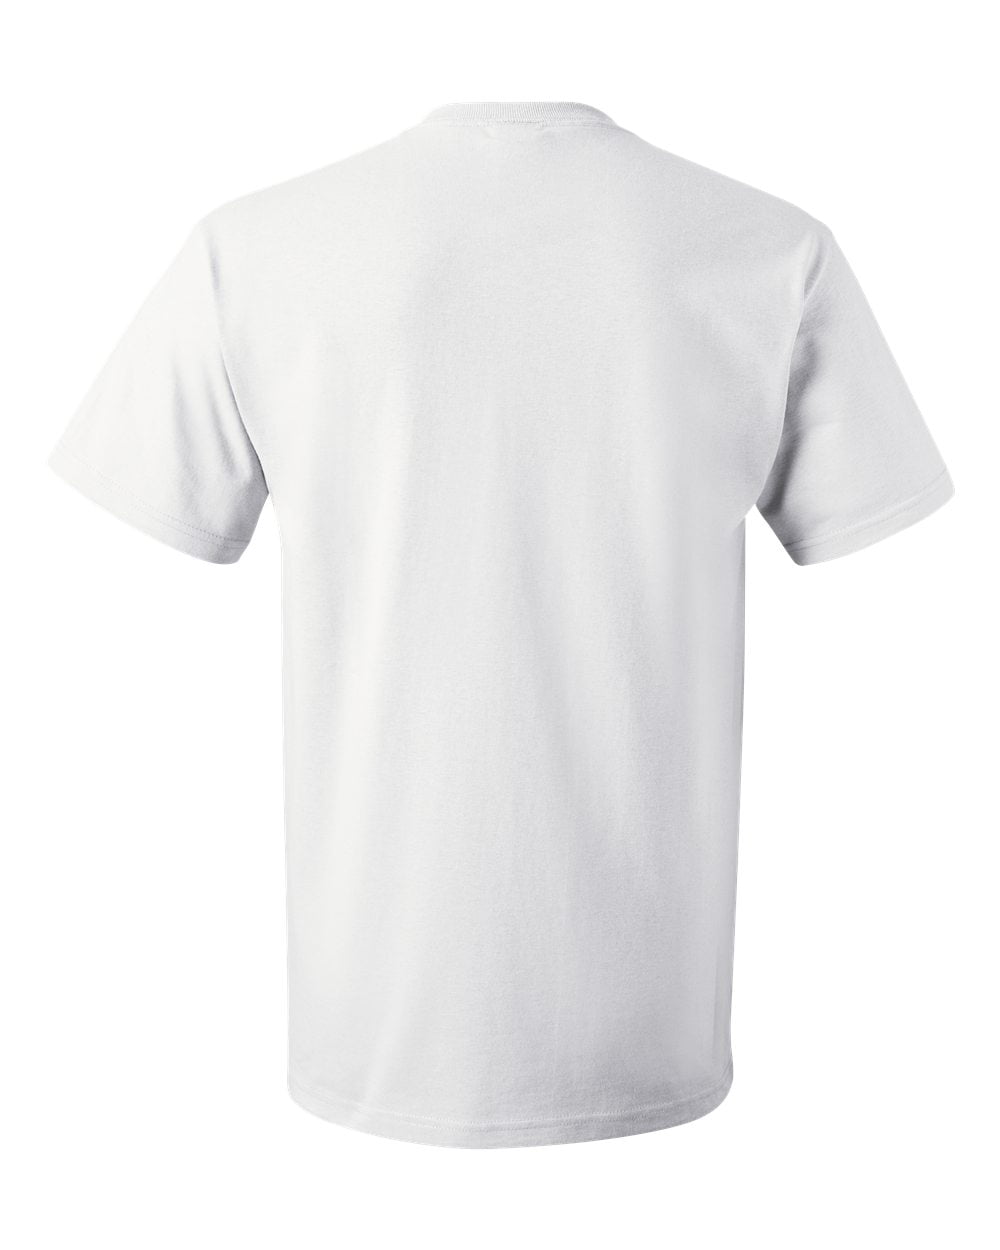 Plain Men/Women Fruit Of The Loom T Shirt T Shirts Short Sleeve 100% Cotton 